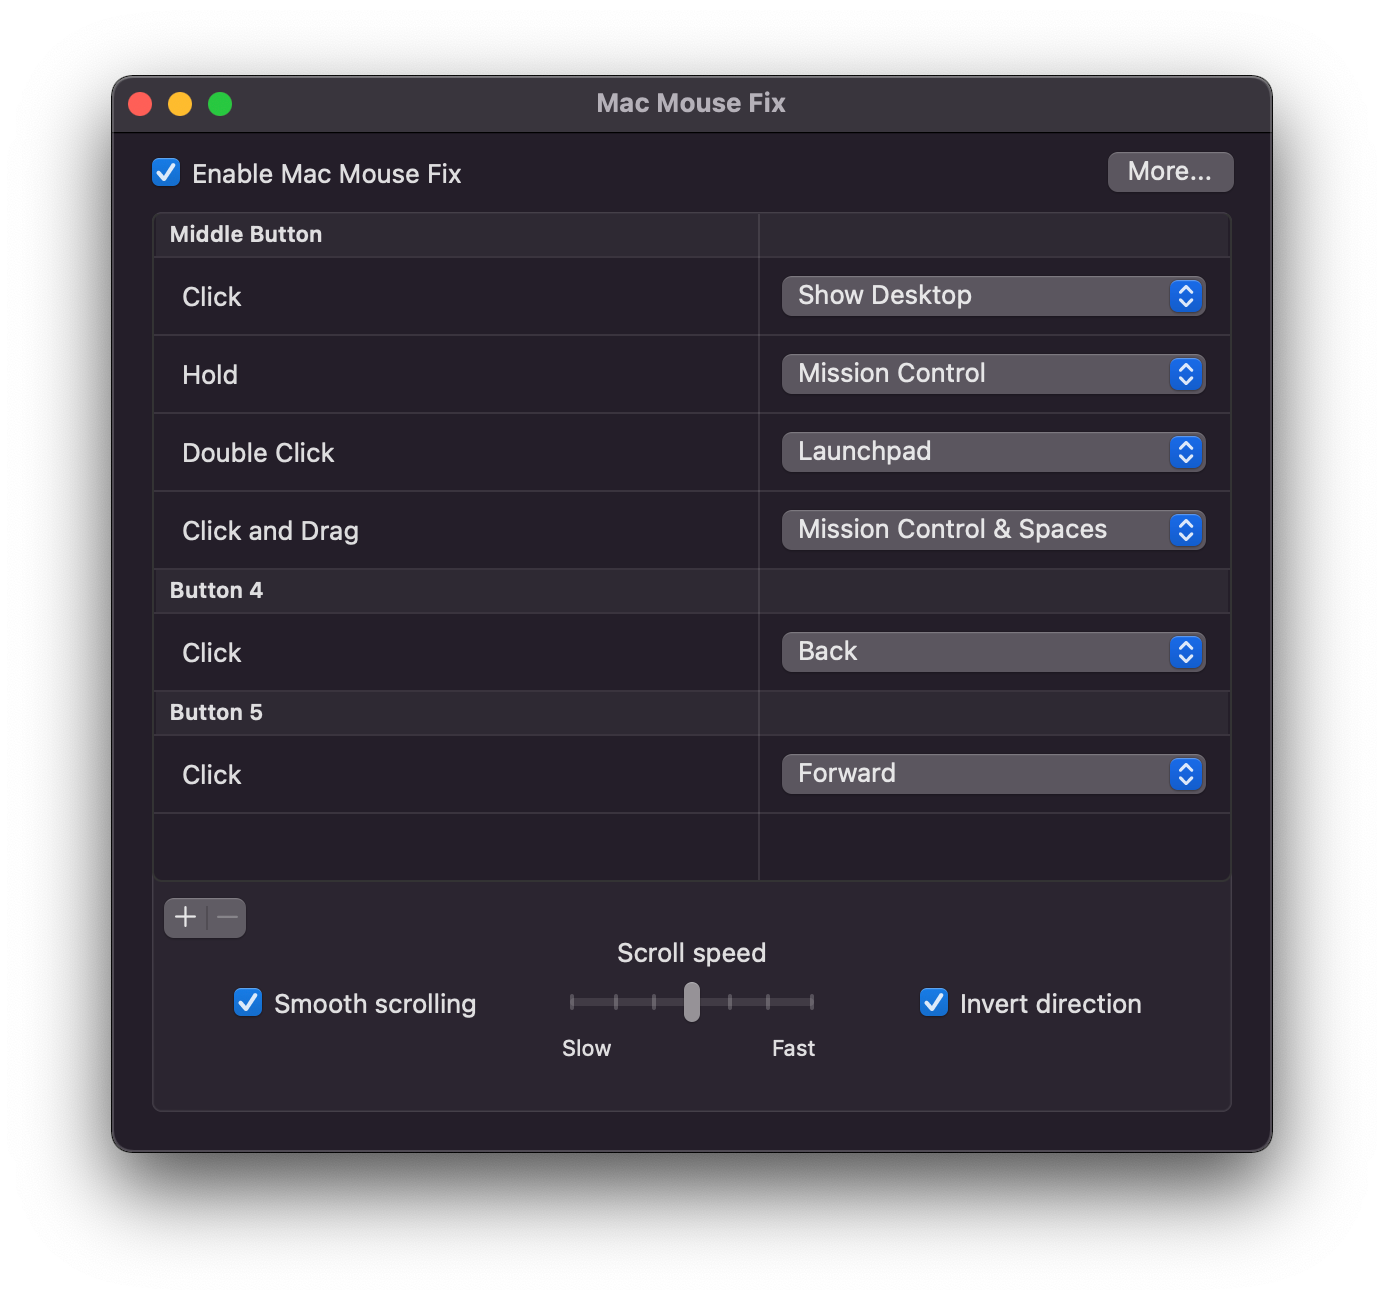 Mac Mouse Fix settings screen